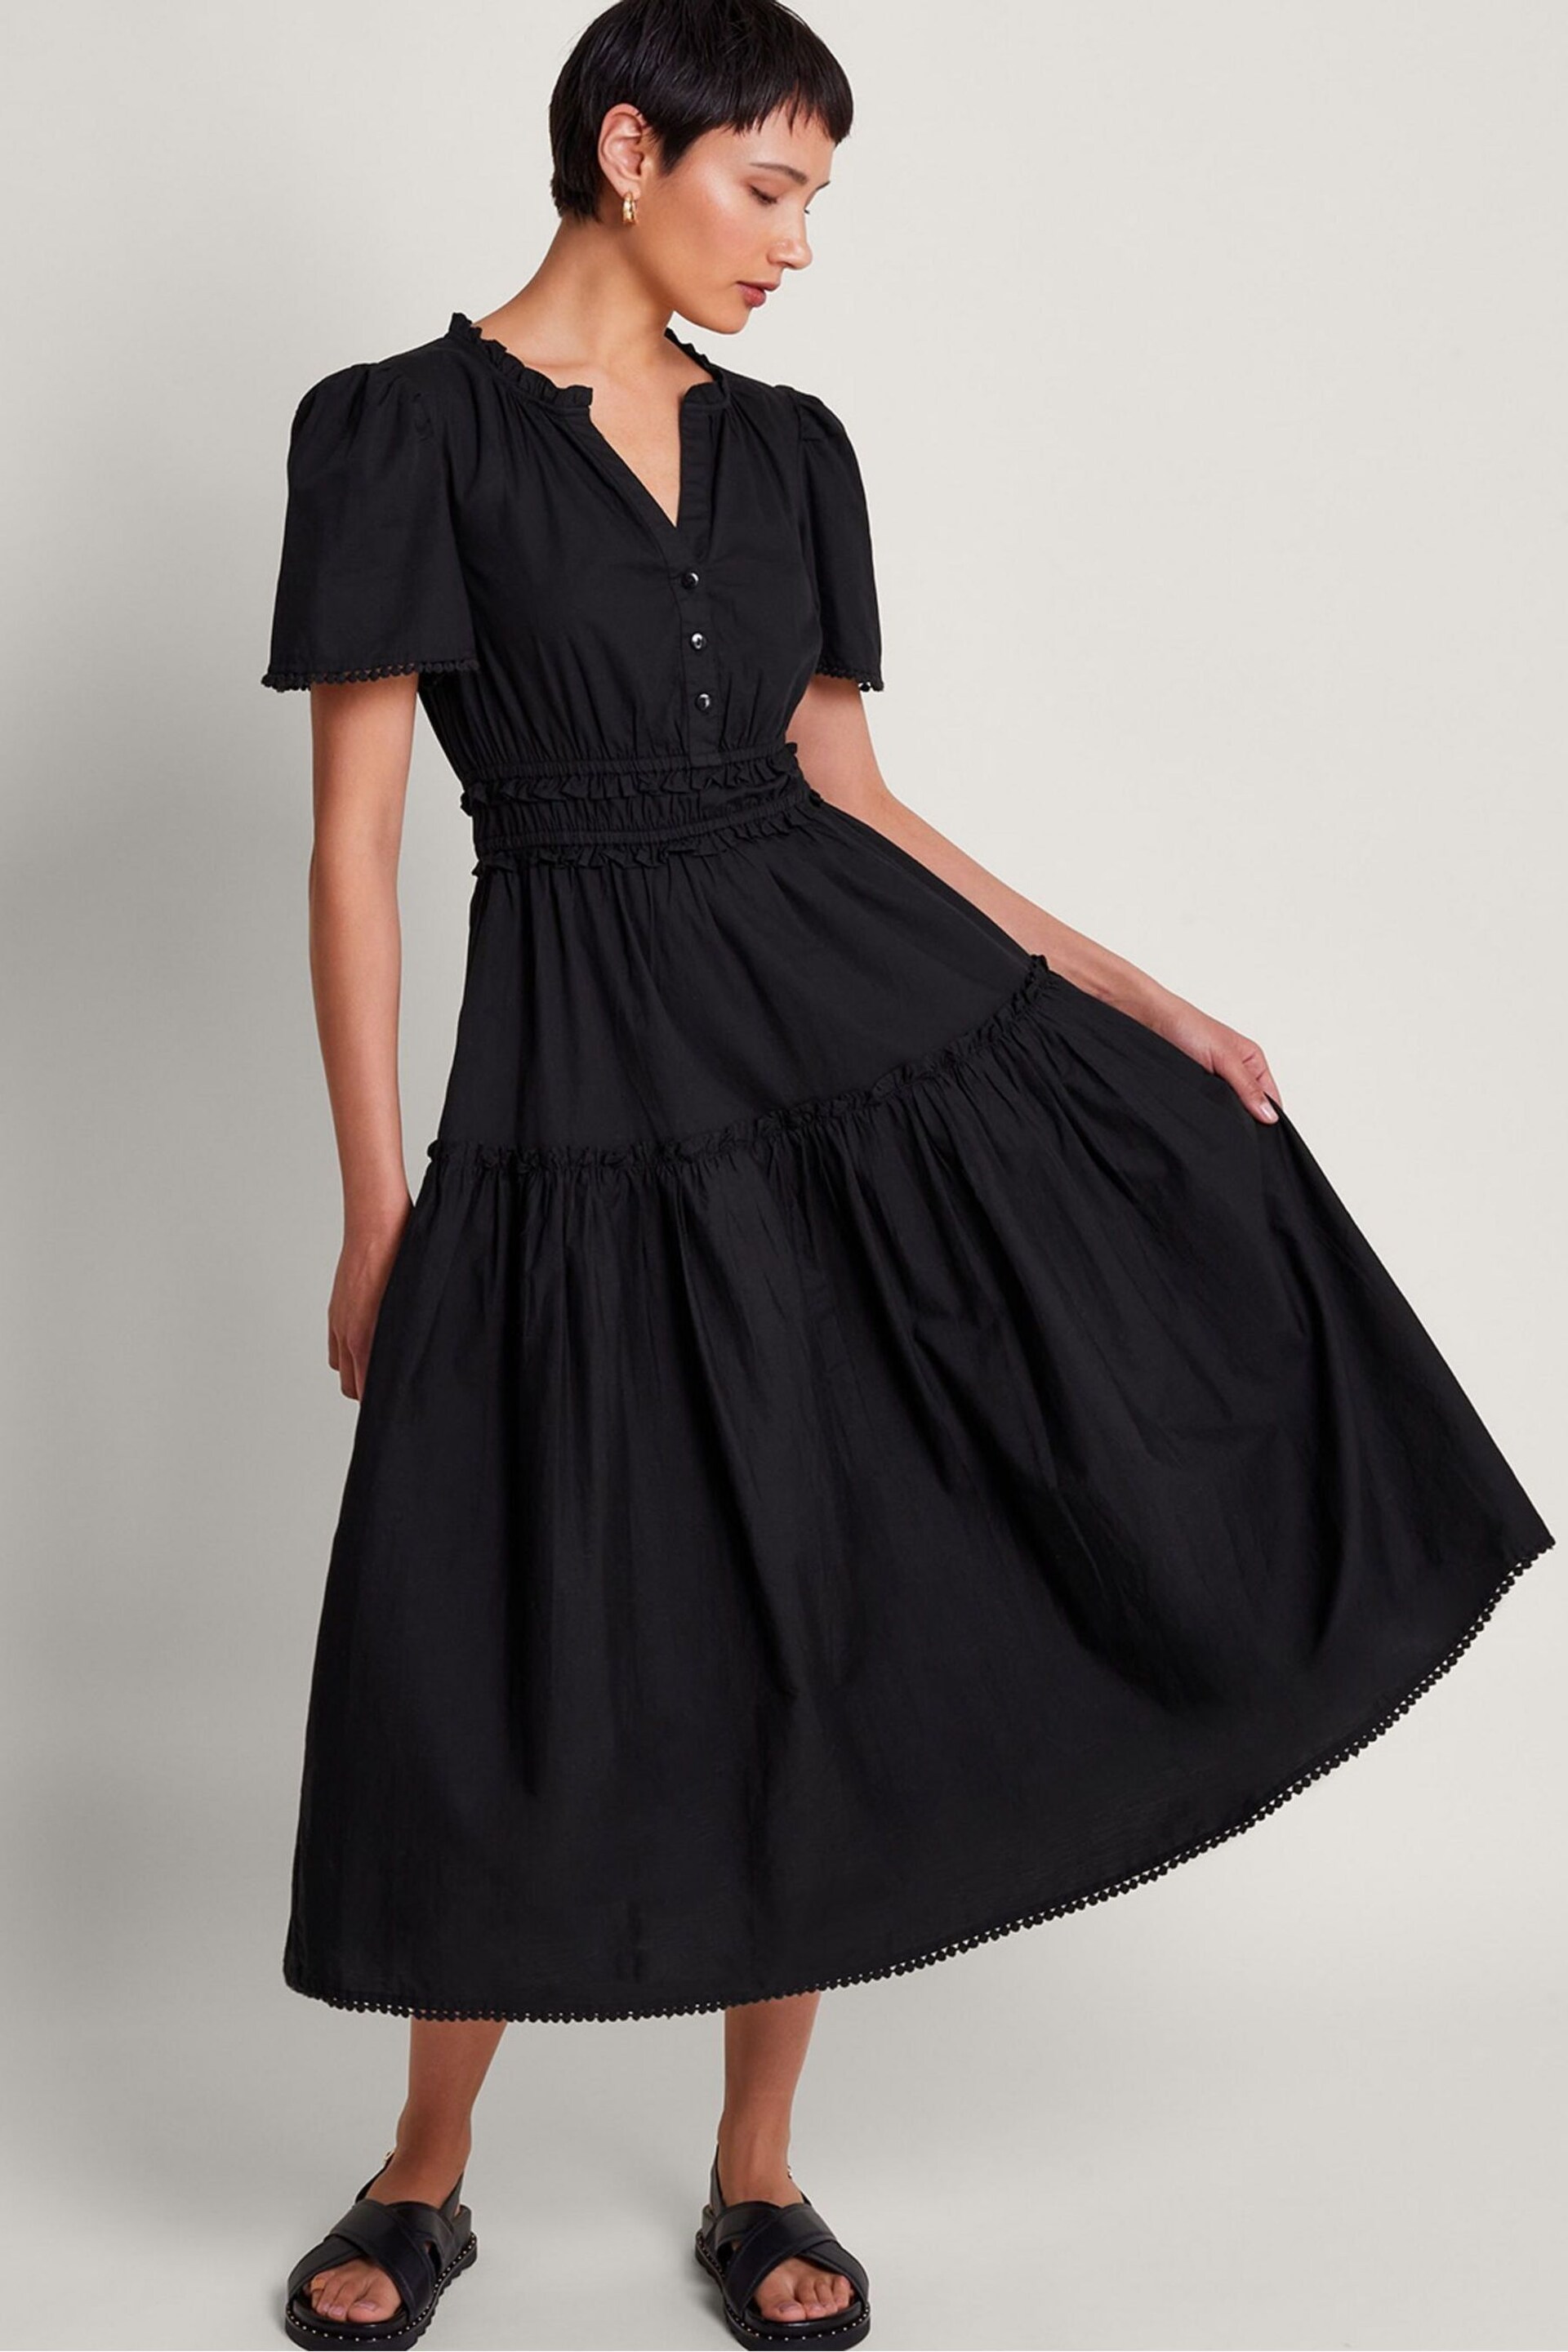 Monsoon Black Frill Lorena Midi Dress - Image 1 of 5